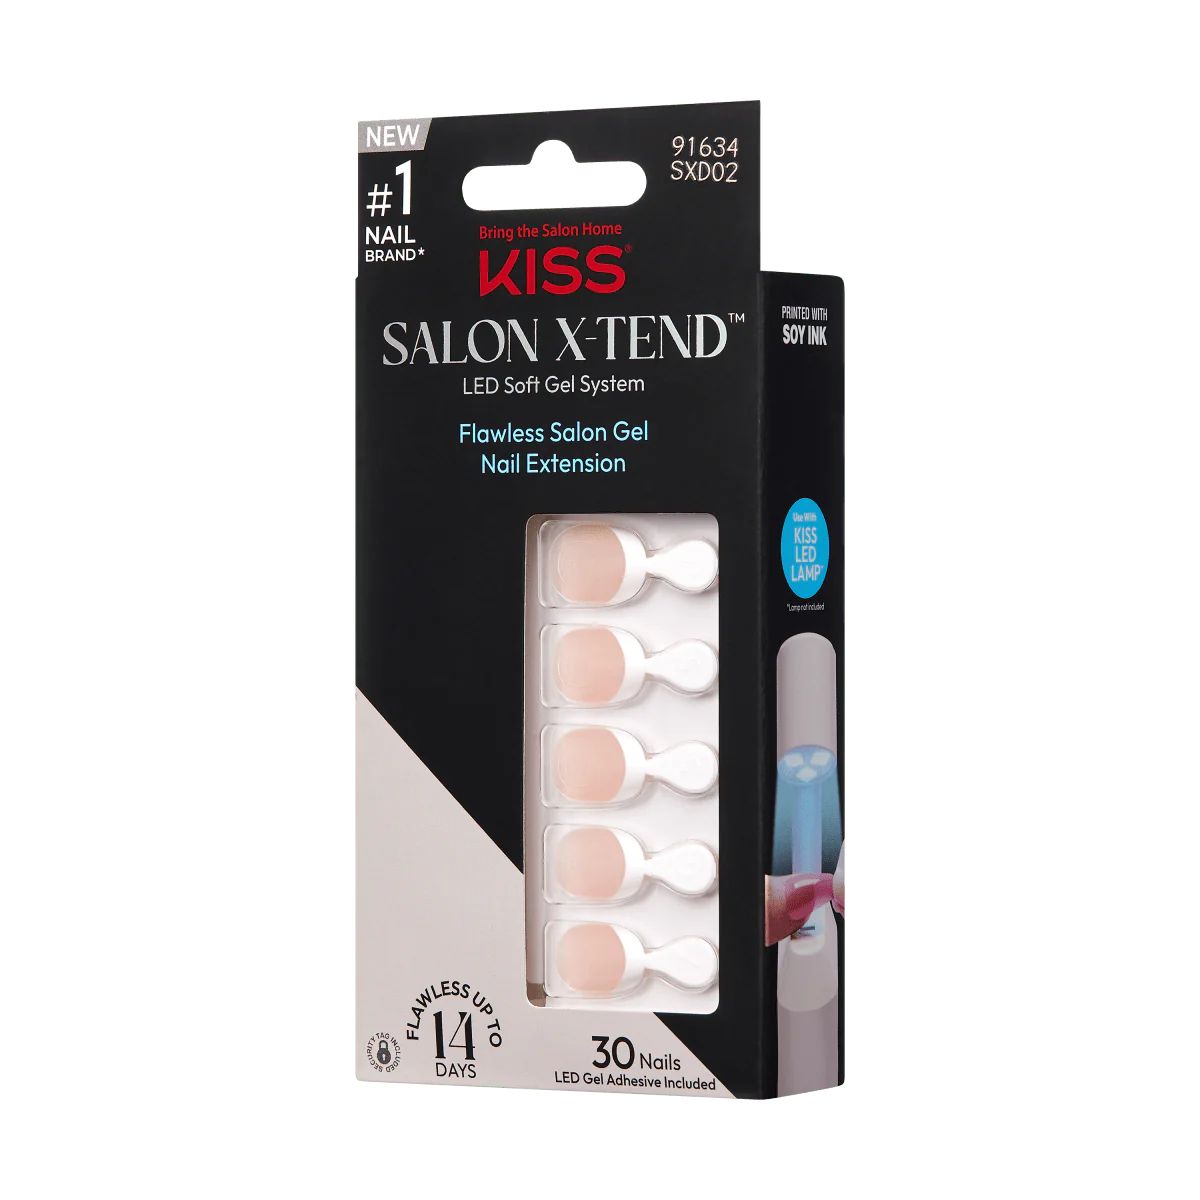 KISS Salon X-tend LED Soft Gel System Decorated Nails, White, Short Almond, 34 Ct. | KISS, imPRESS, JOAH